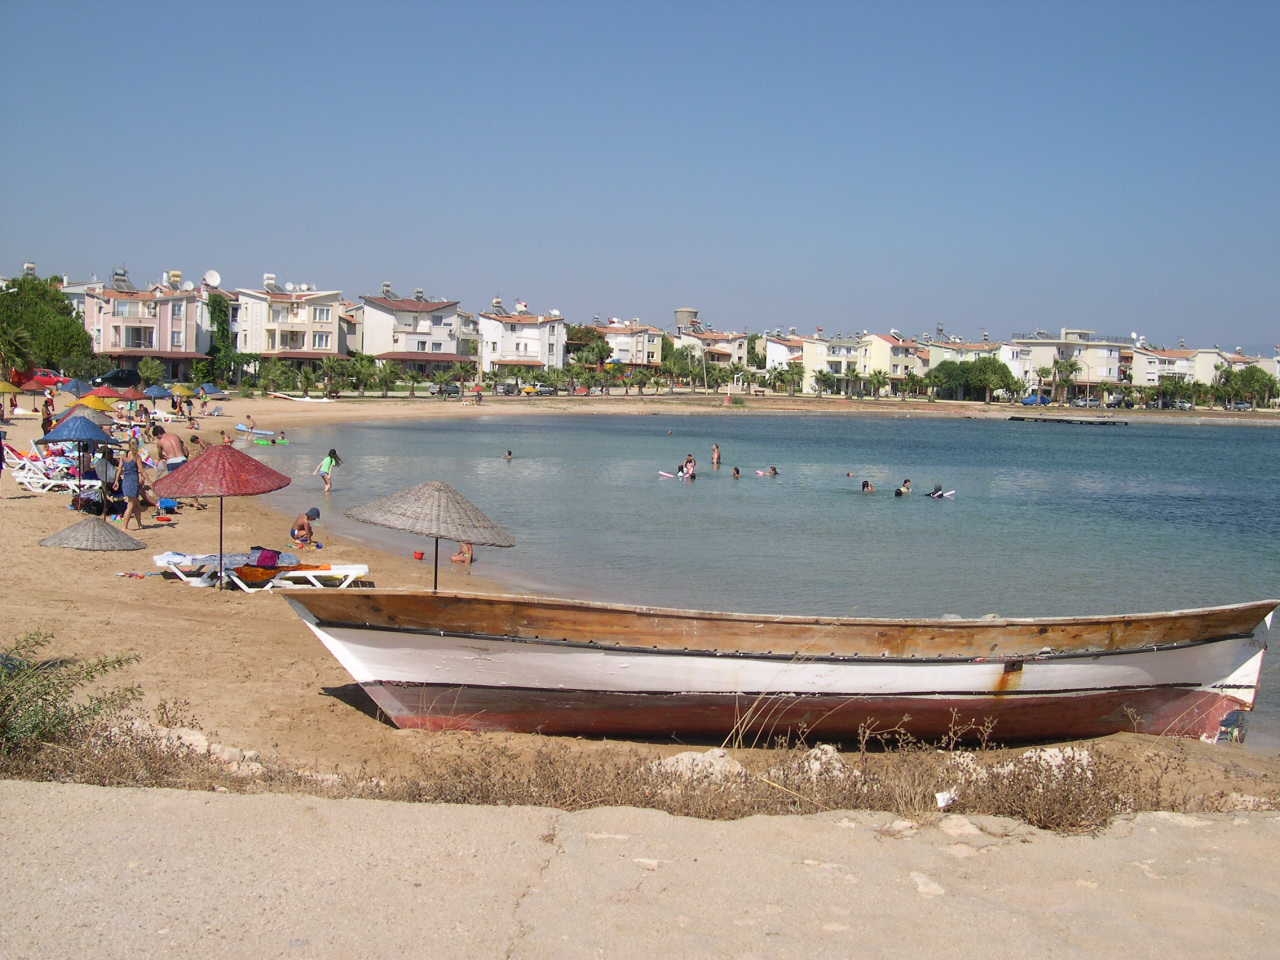 Fotografija Yildirim beach z turkizna voda površino